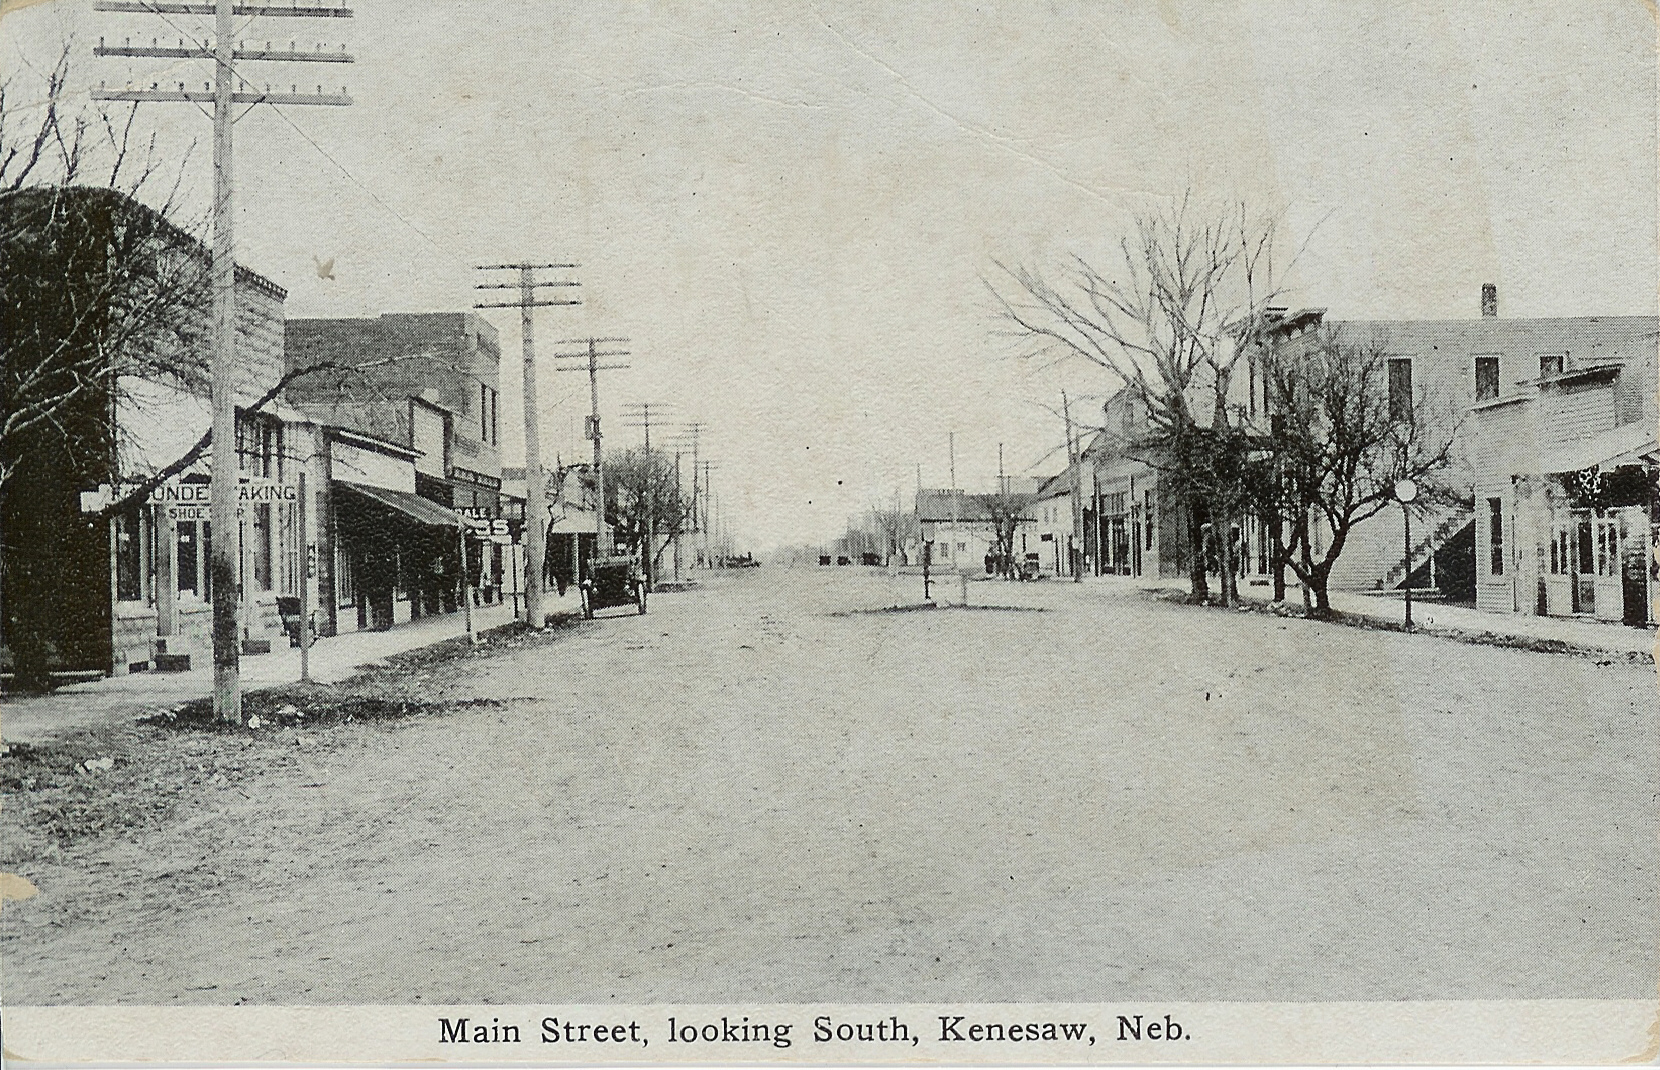 Main Street, looking South, Kenesaw, Nebraska.